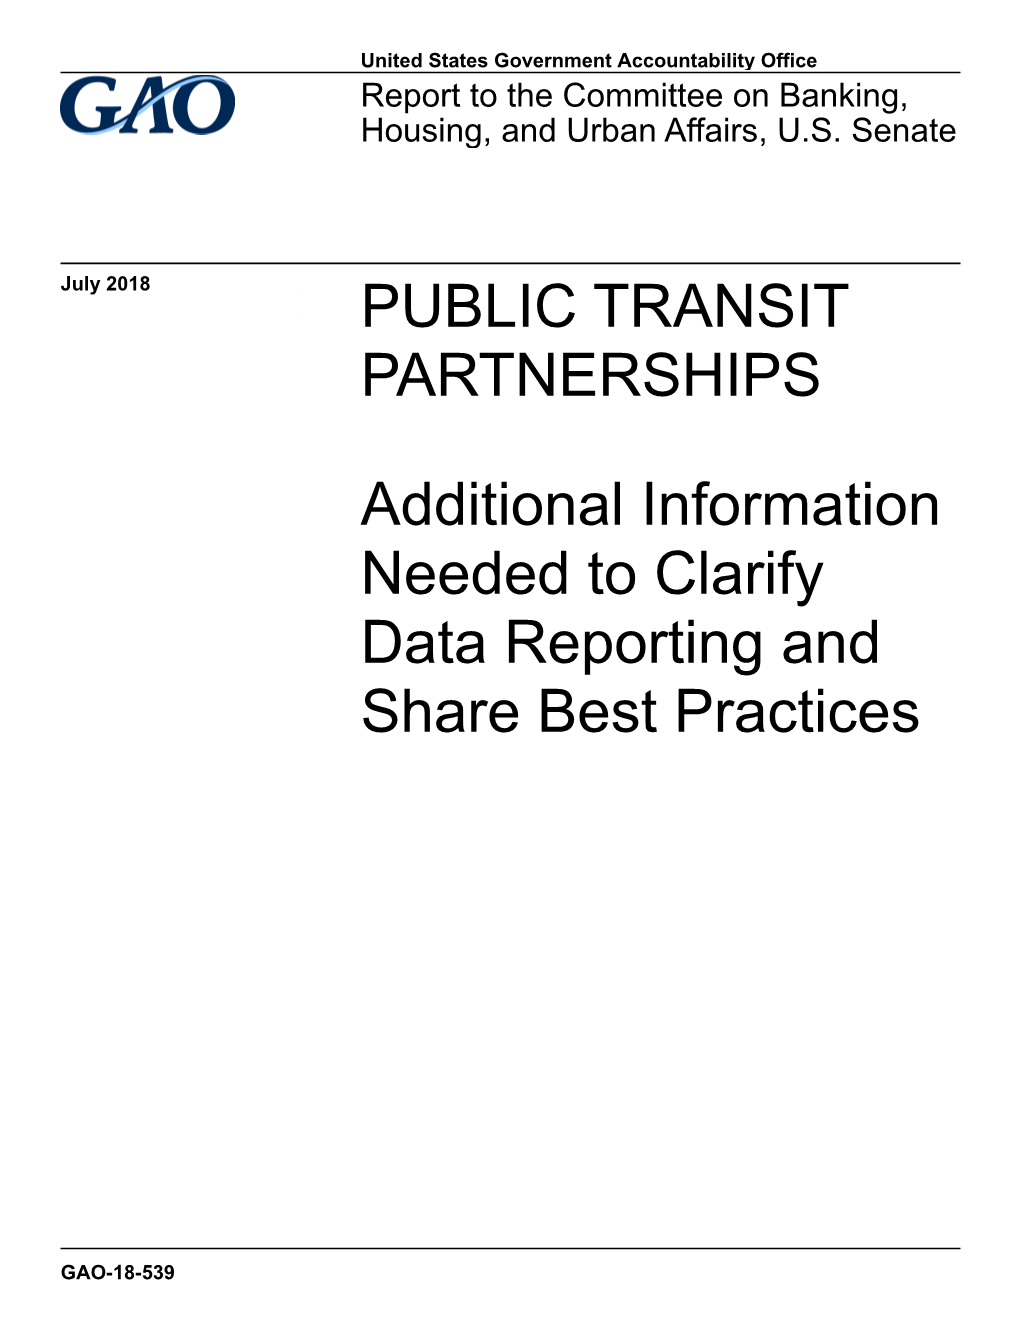 Public Transit Partnerships: Additional Information Needed to Clarify Data